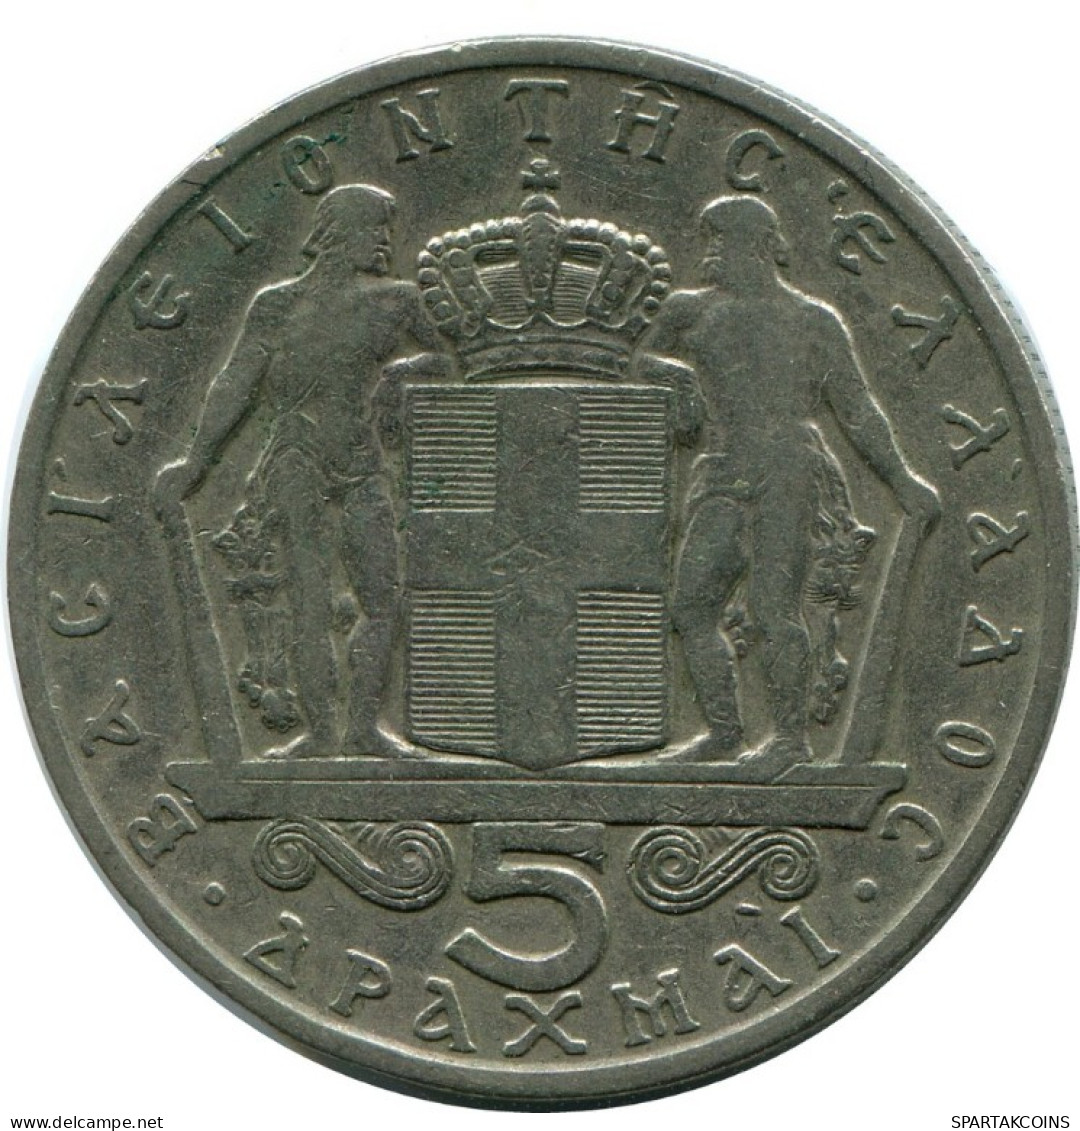 5 DRACHMES 1966 GREECE Coin Constantine II #AH714.U.A - Greece